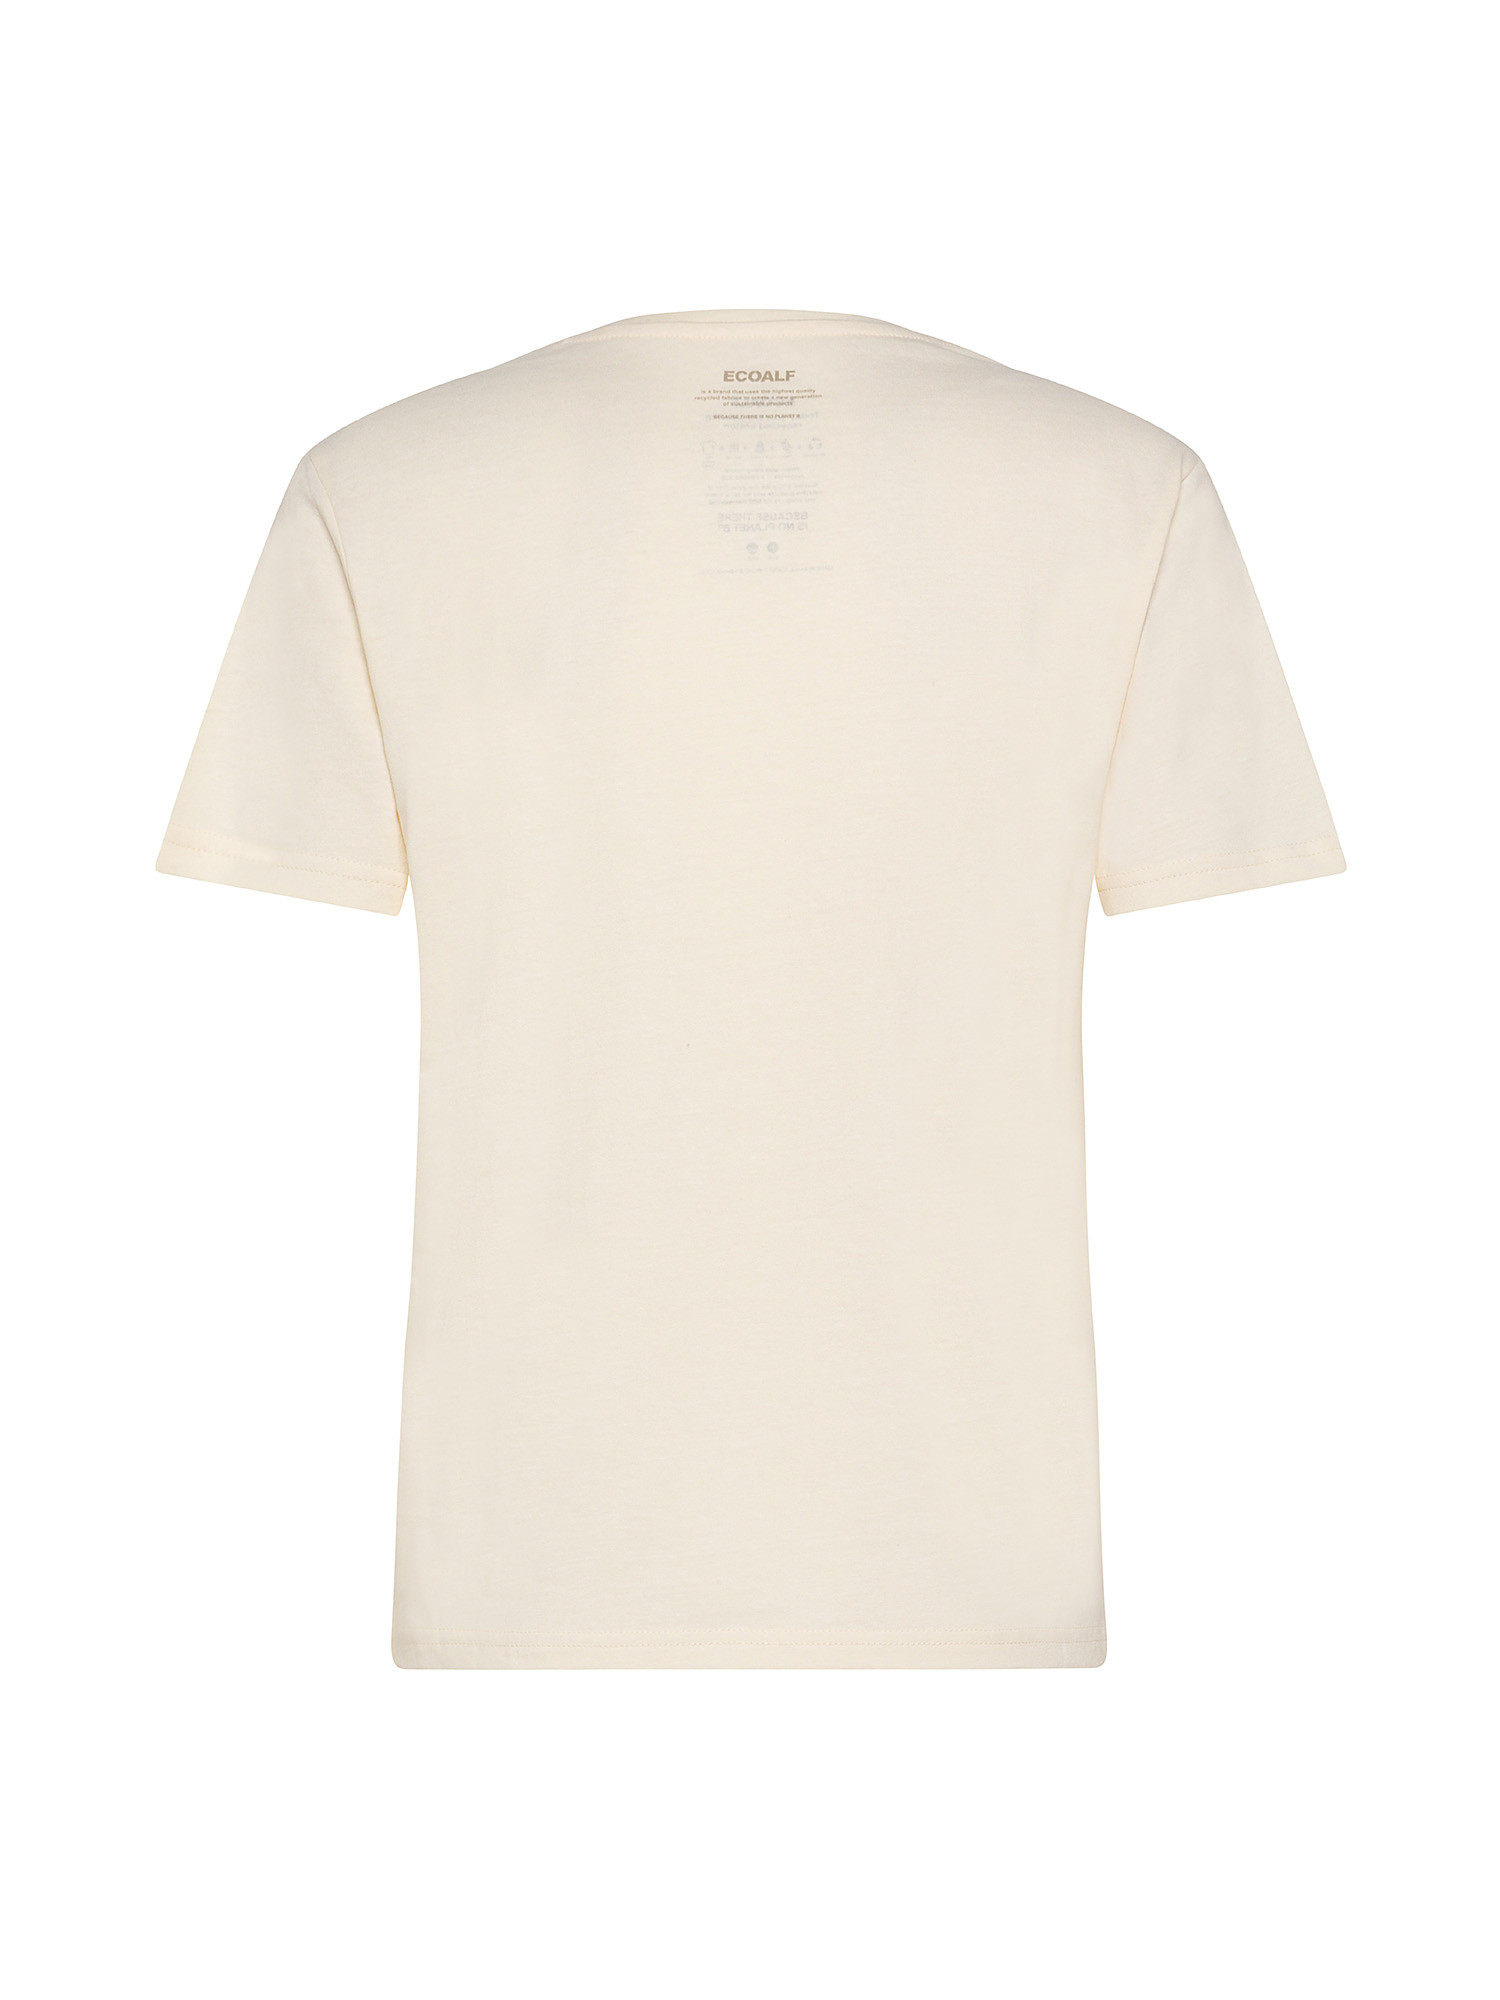 Ecoalf - T-shirt con stampa, Crema, large image number 1